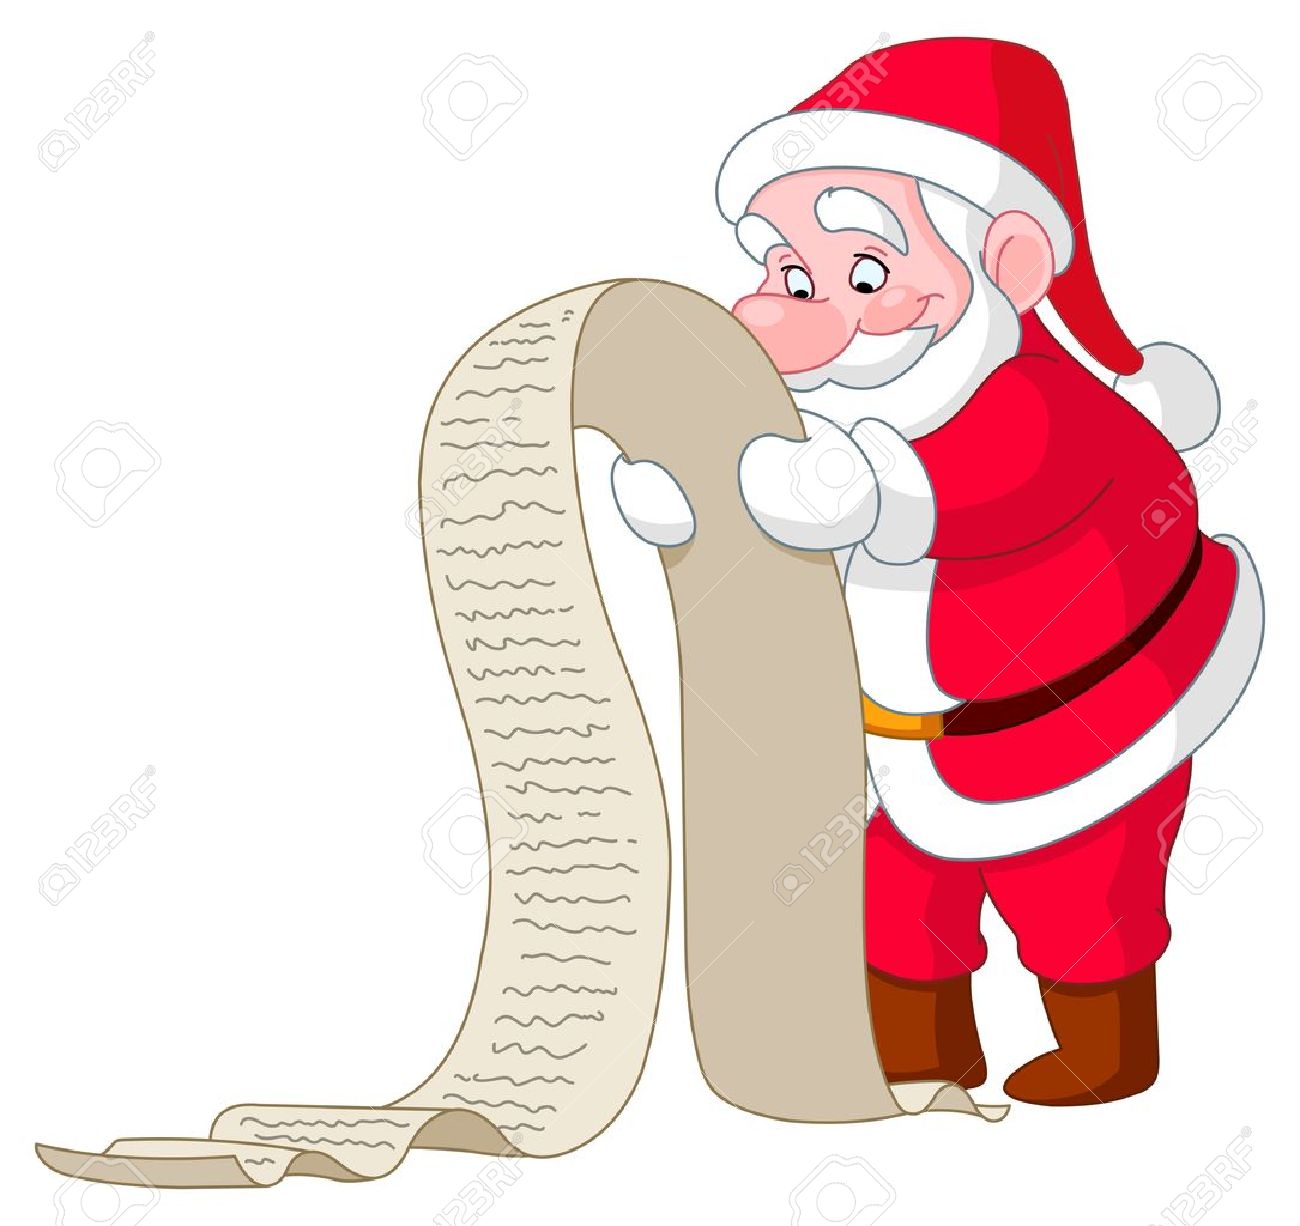 Christmas Wish List Clipart.